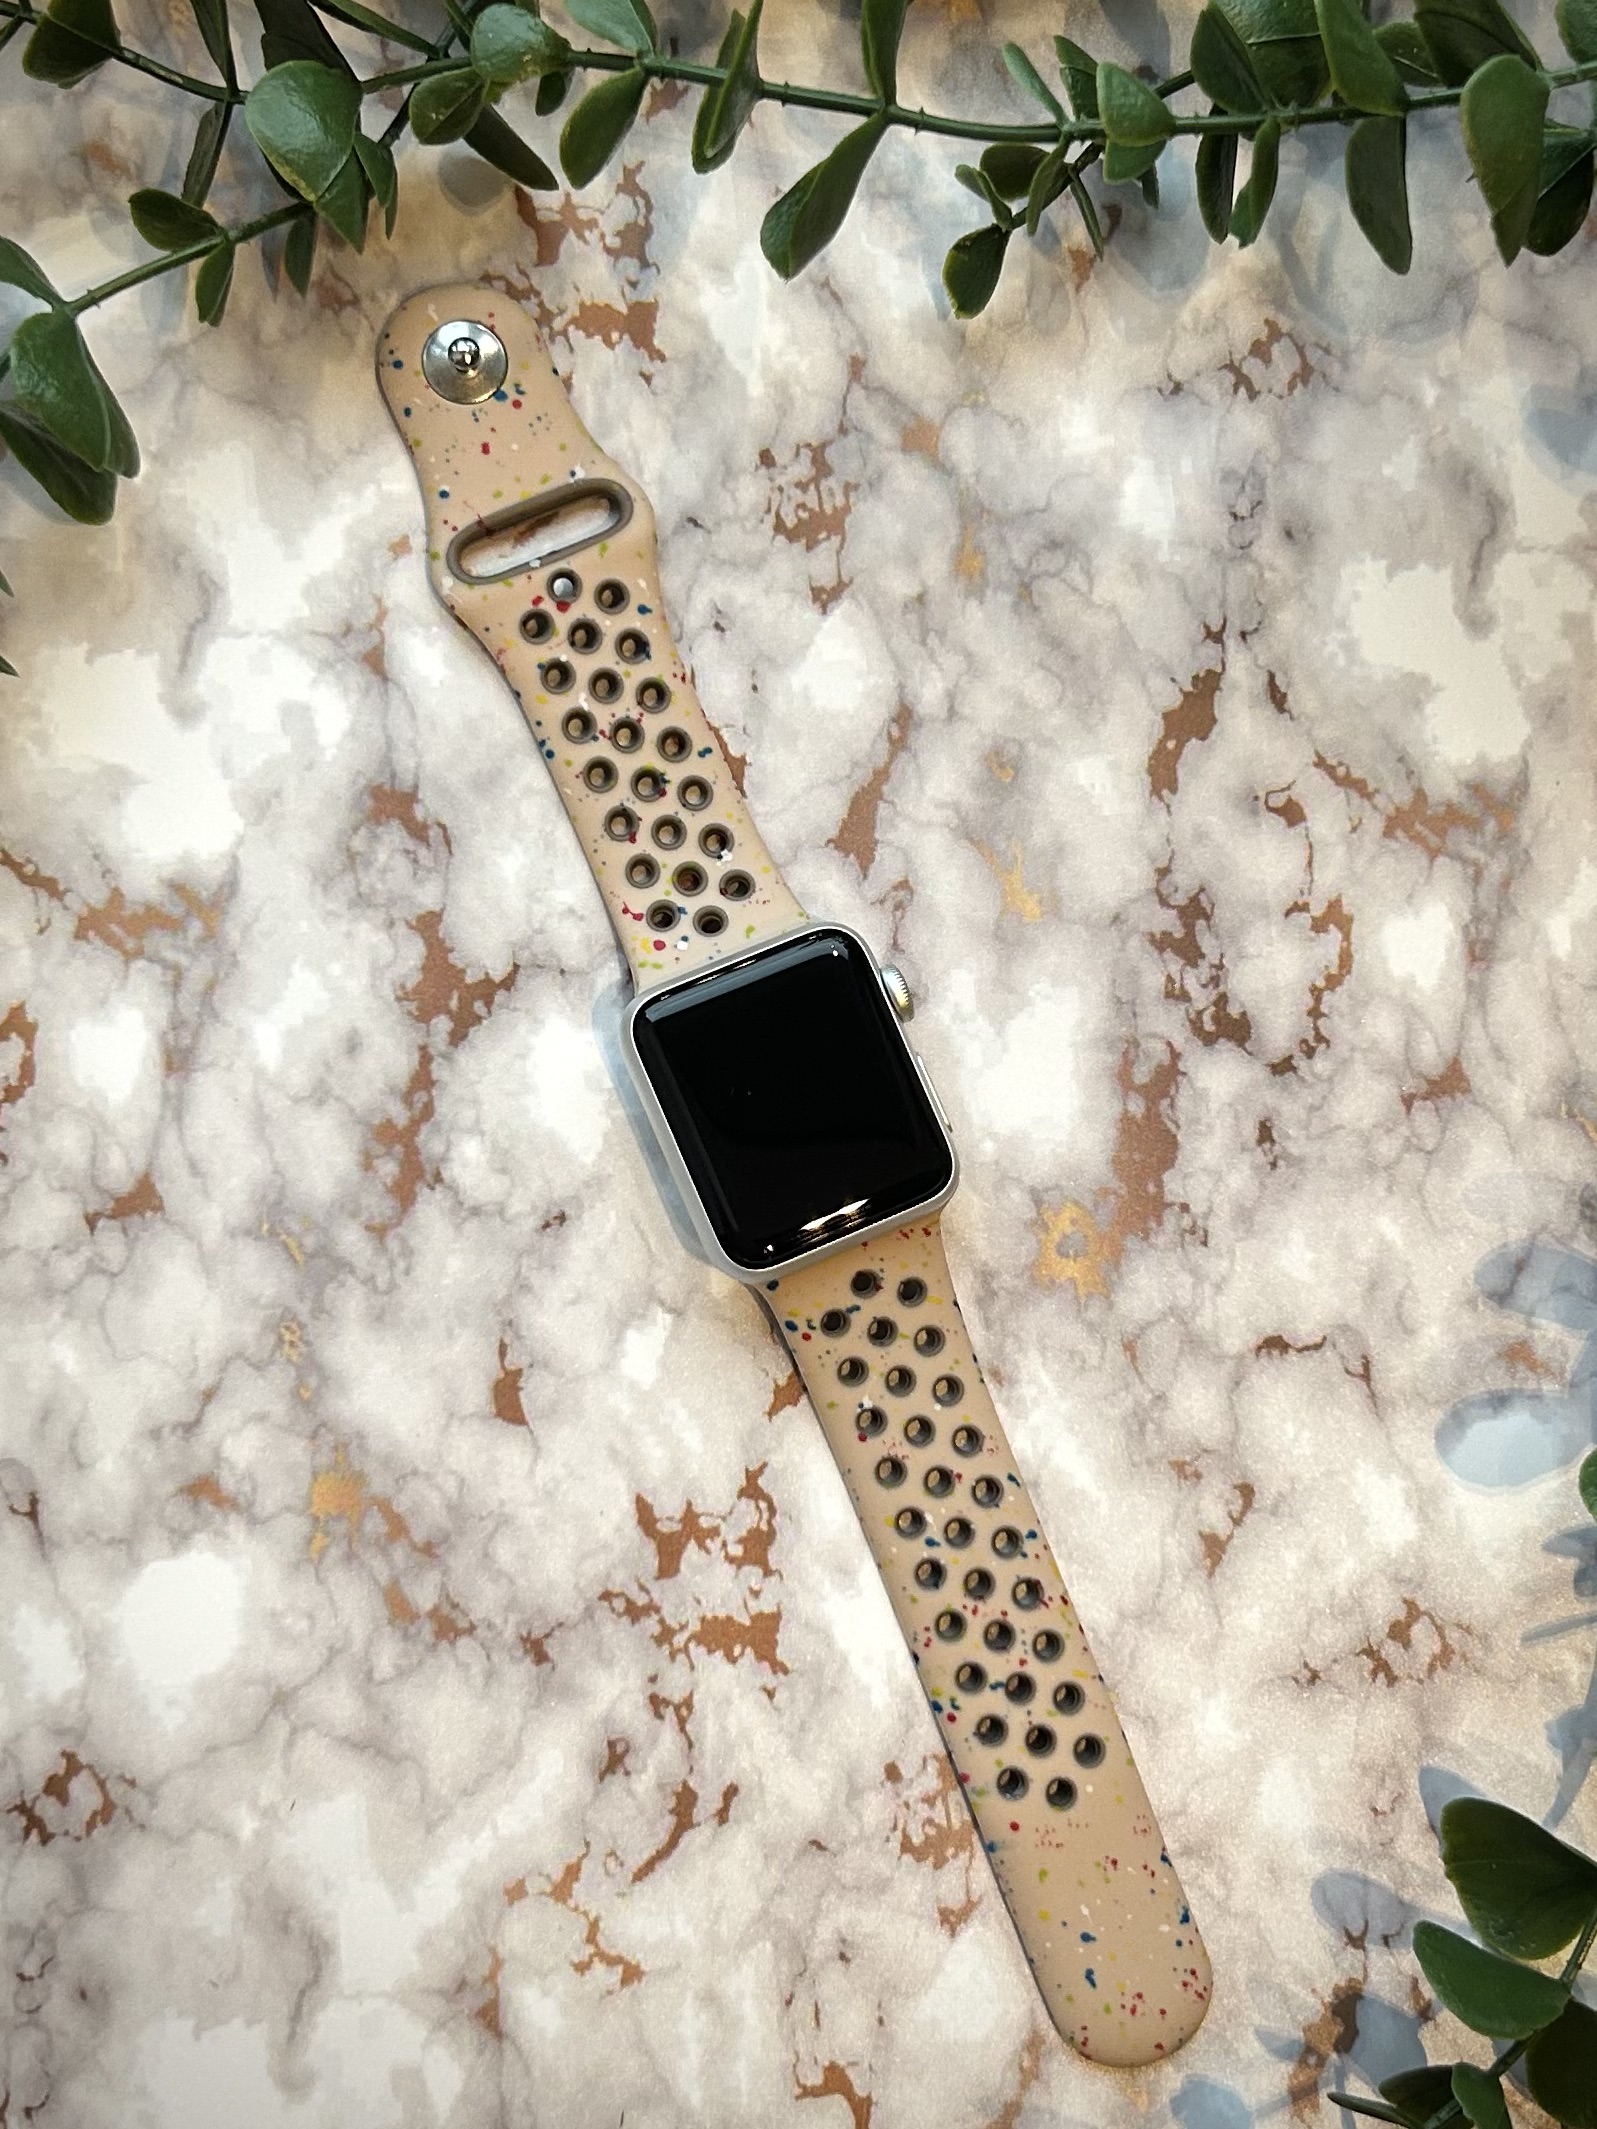 Bracelet sport double Apple Watch - pierre du désert